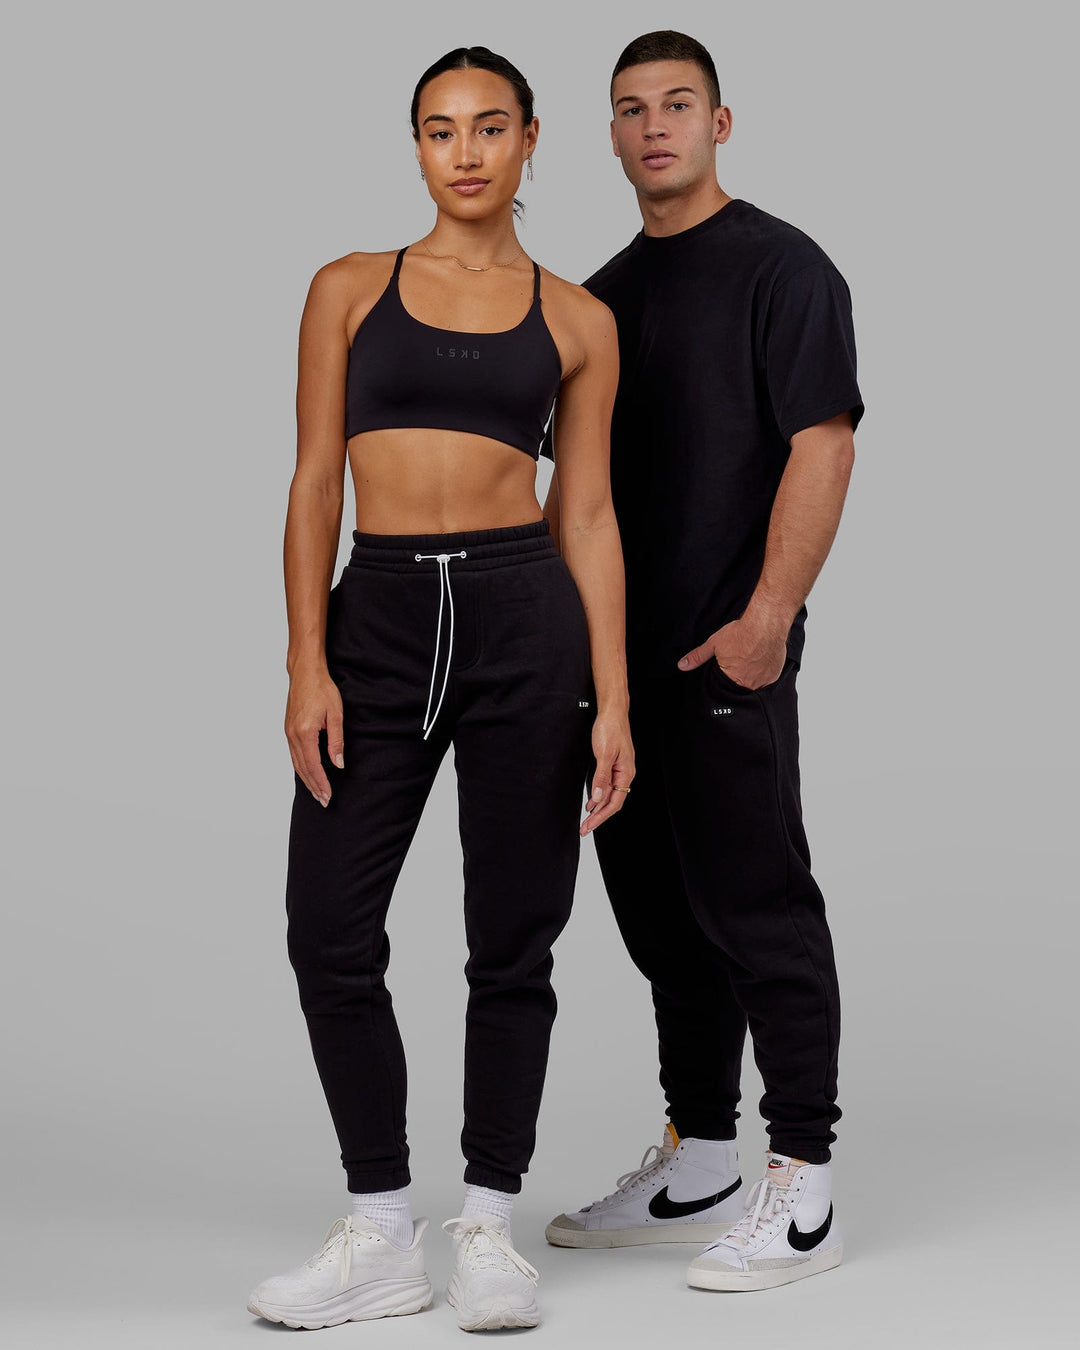 Duo wearing Unisex Capsule Track Pant - Black